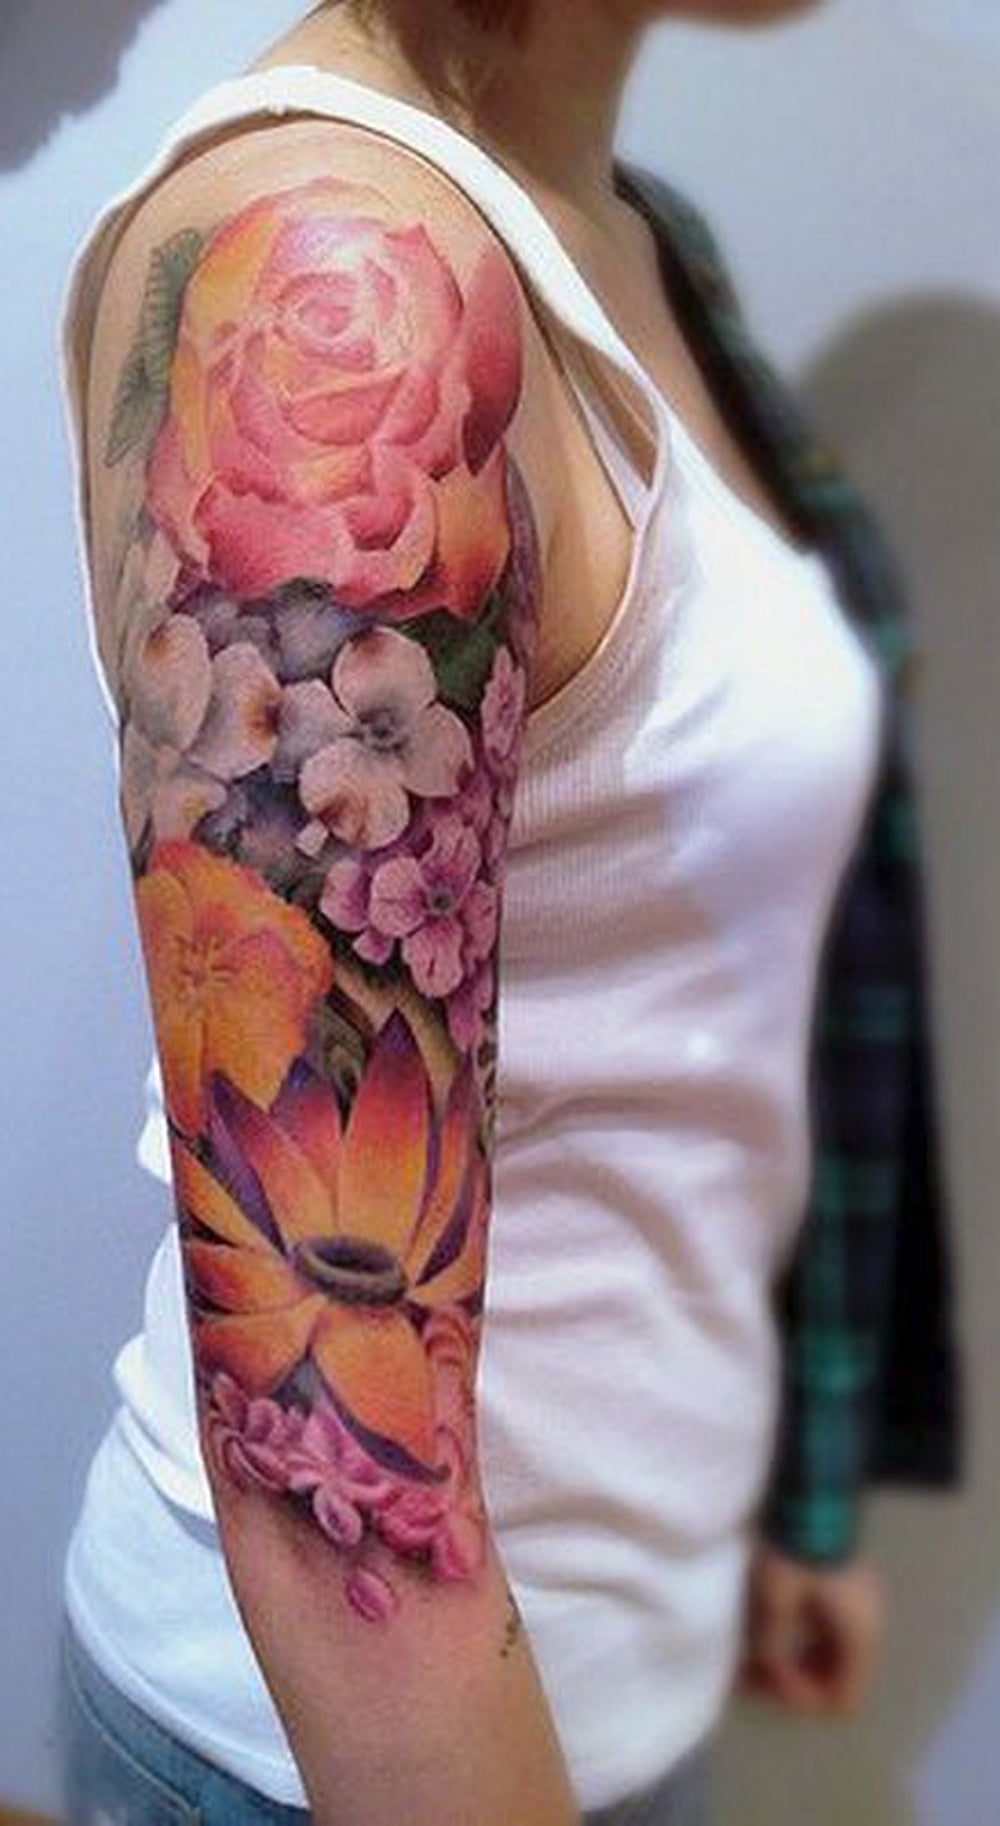 Colorful Flower Full Arm Sleeve Tattoo Ideas for Women - Watercolor Floral Bicep Tat -  ideas coloridas del tatuaje de la manga del brazo de la flor para las mujeres - www.MyBodiArt.com